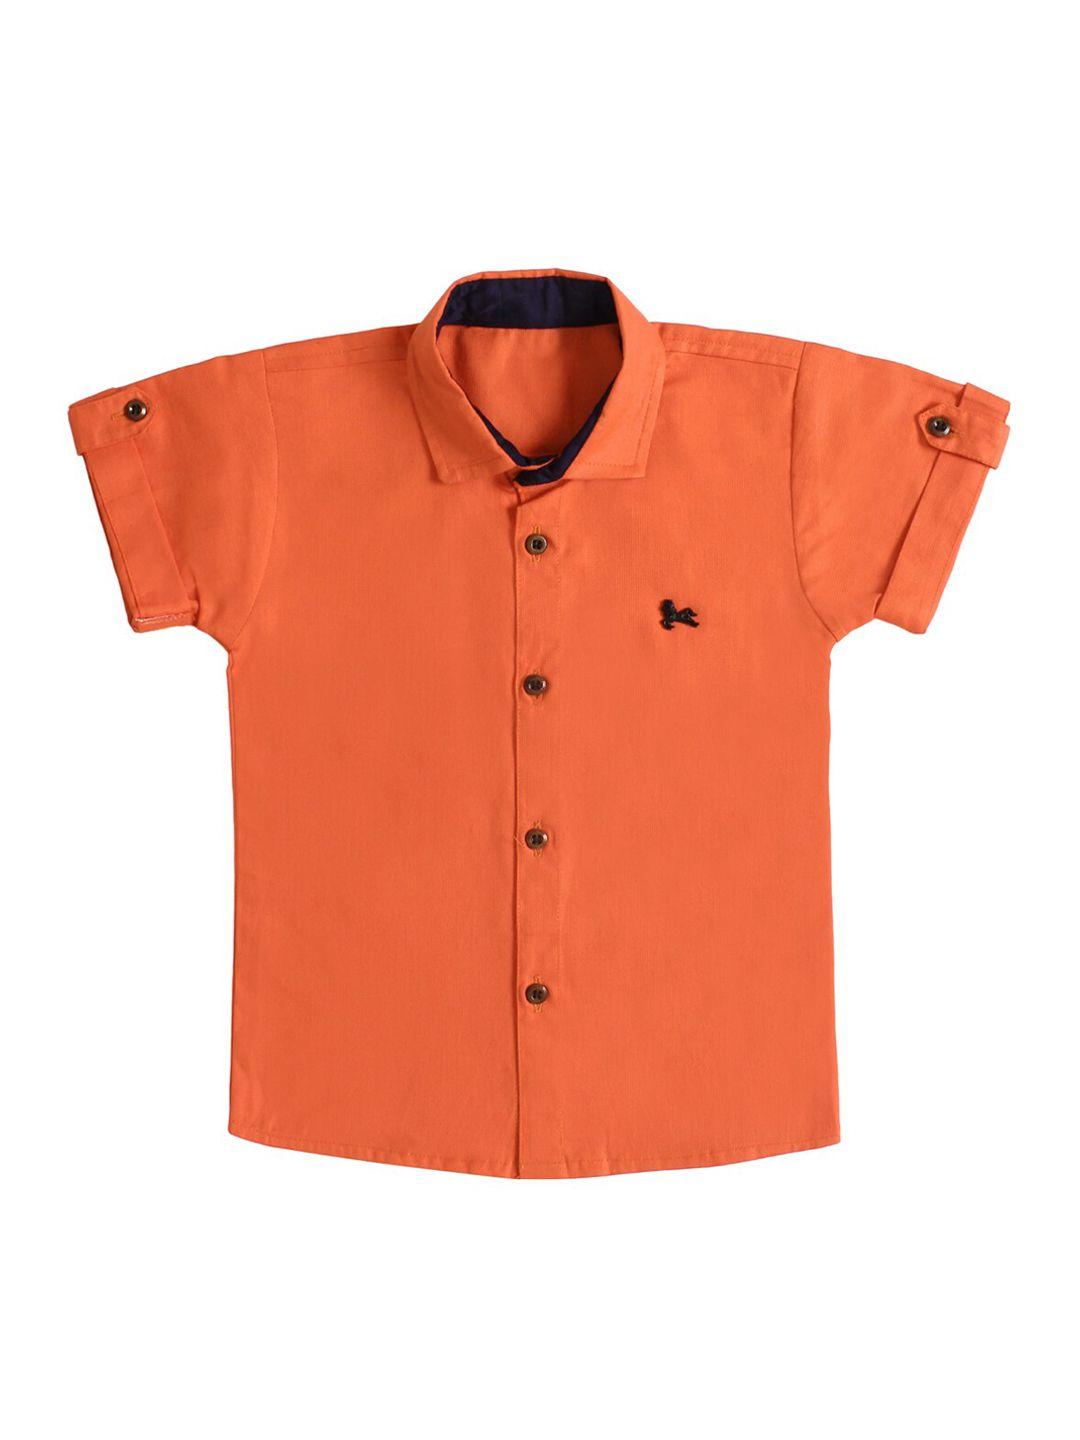 superminis boys orange solid cotton casual shirt